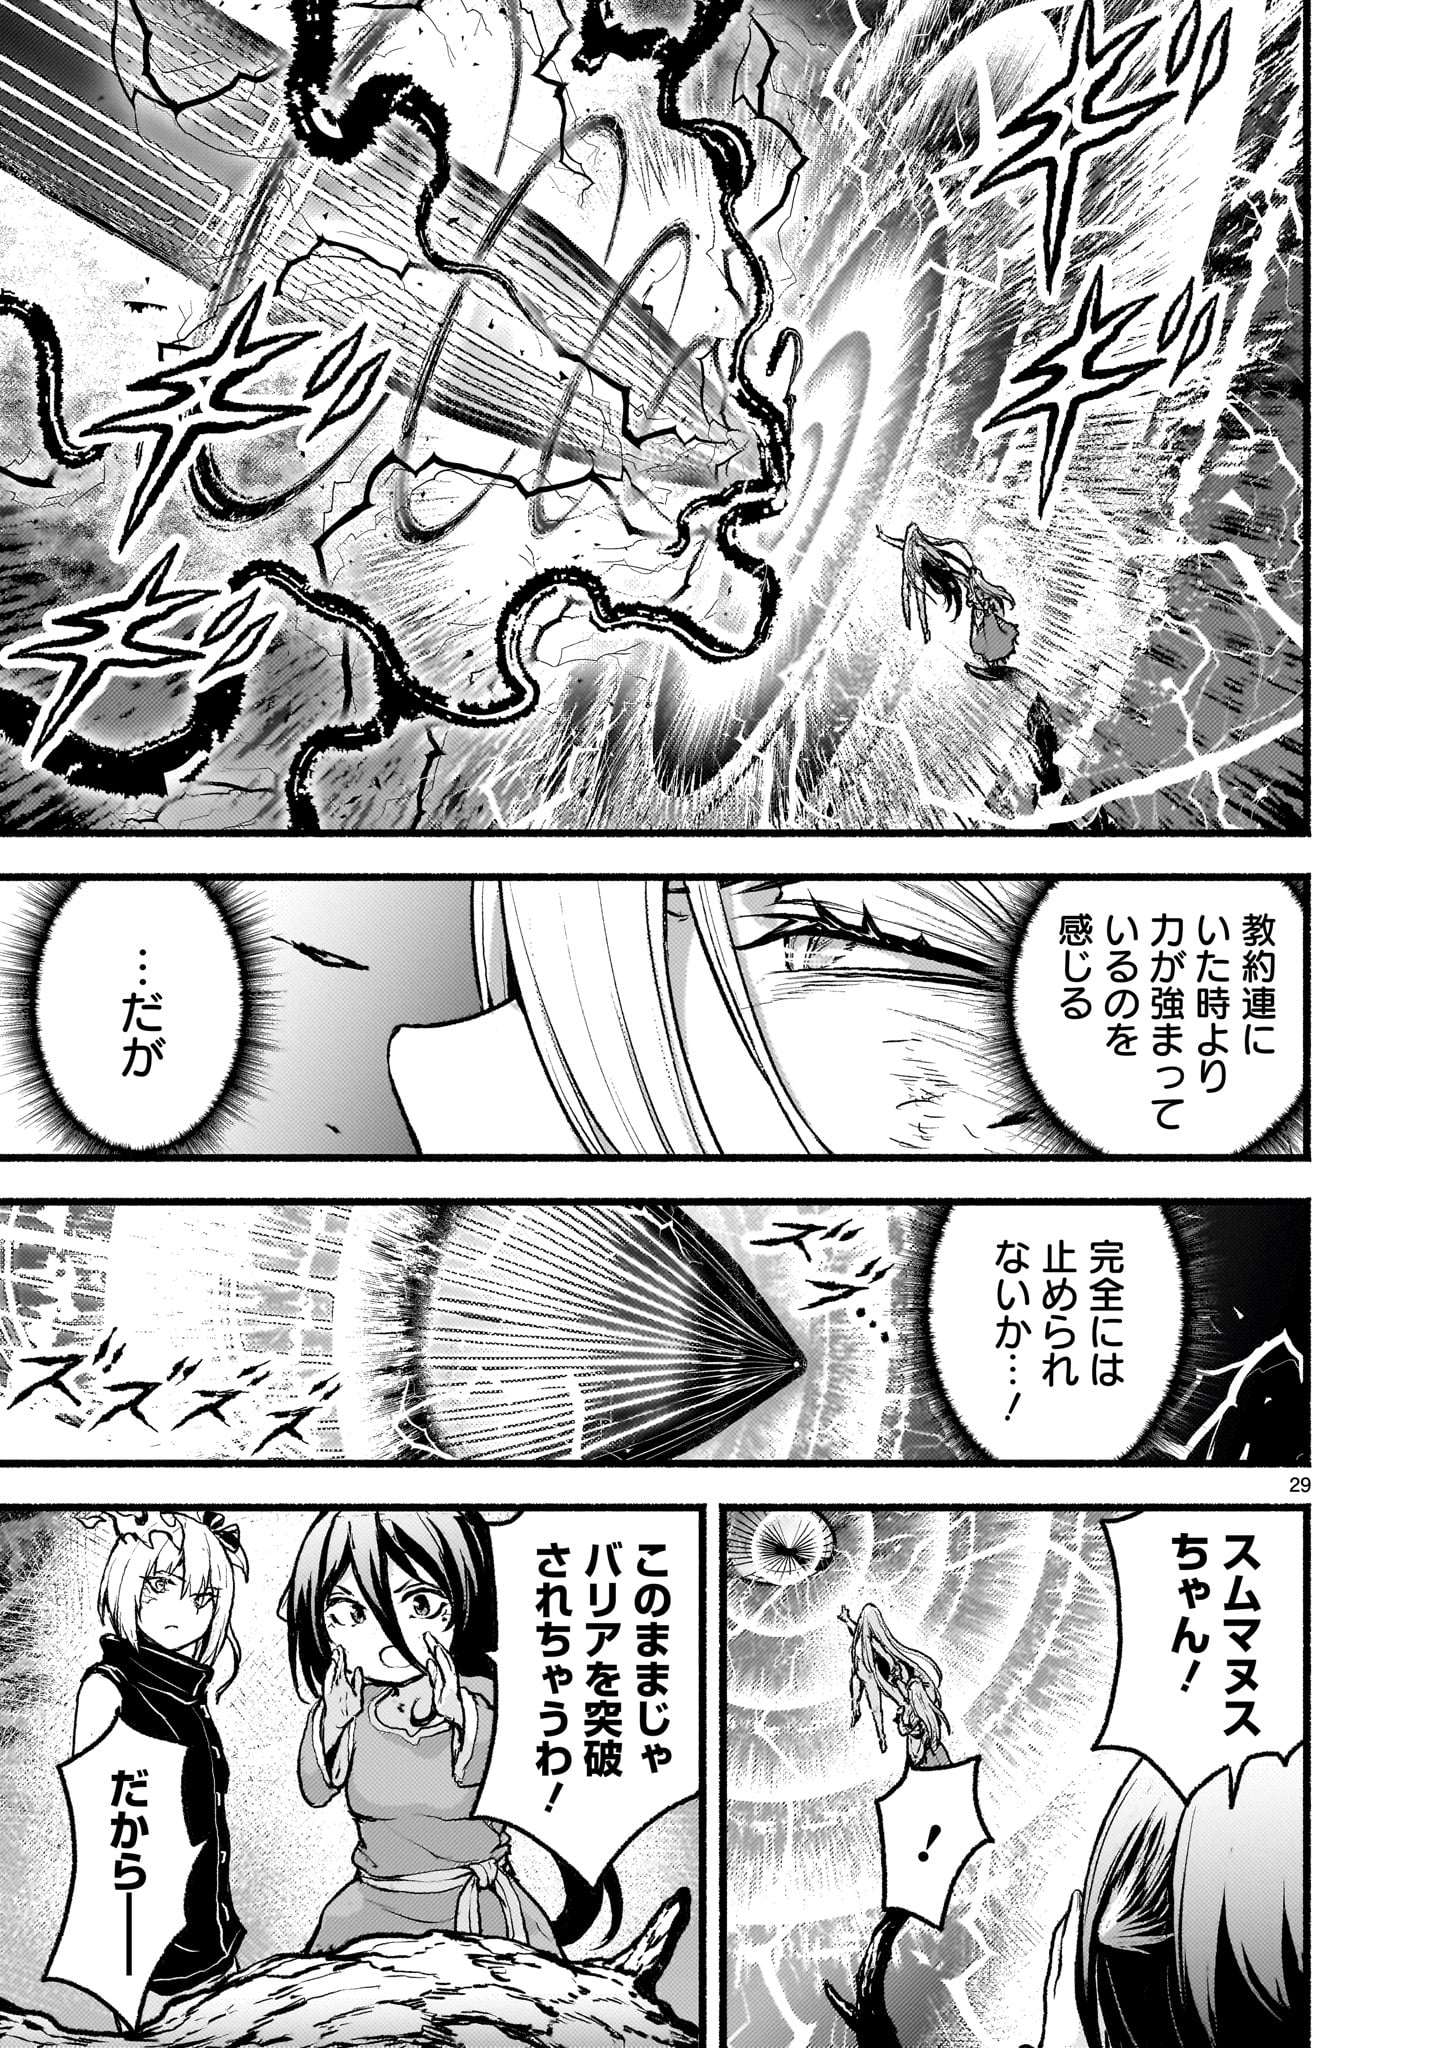 Kaminaki Sekai no Kamisama Katsudou - Chapter 54.1 - Page 29